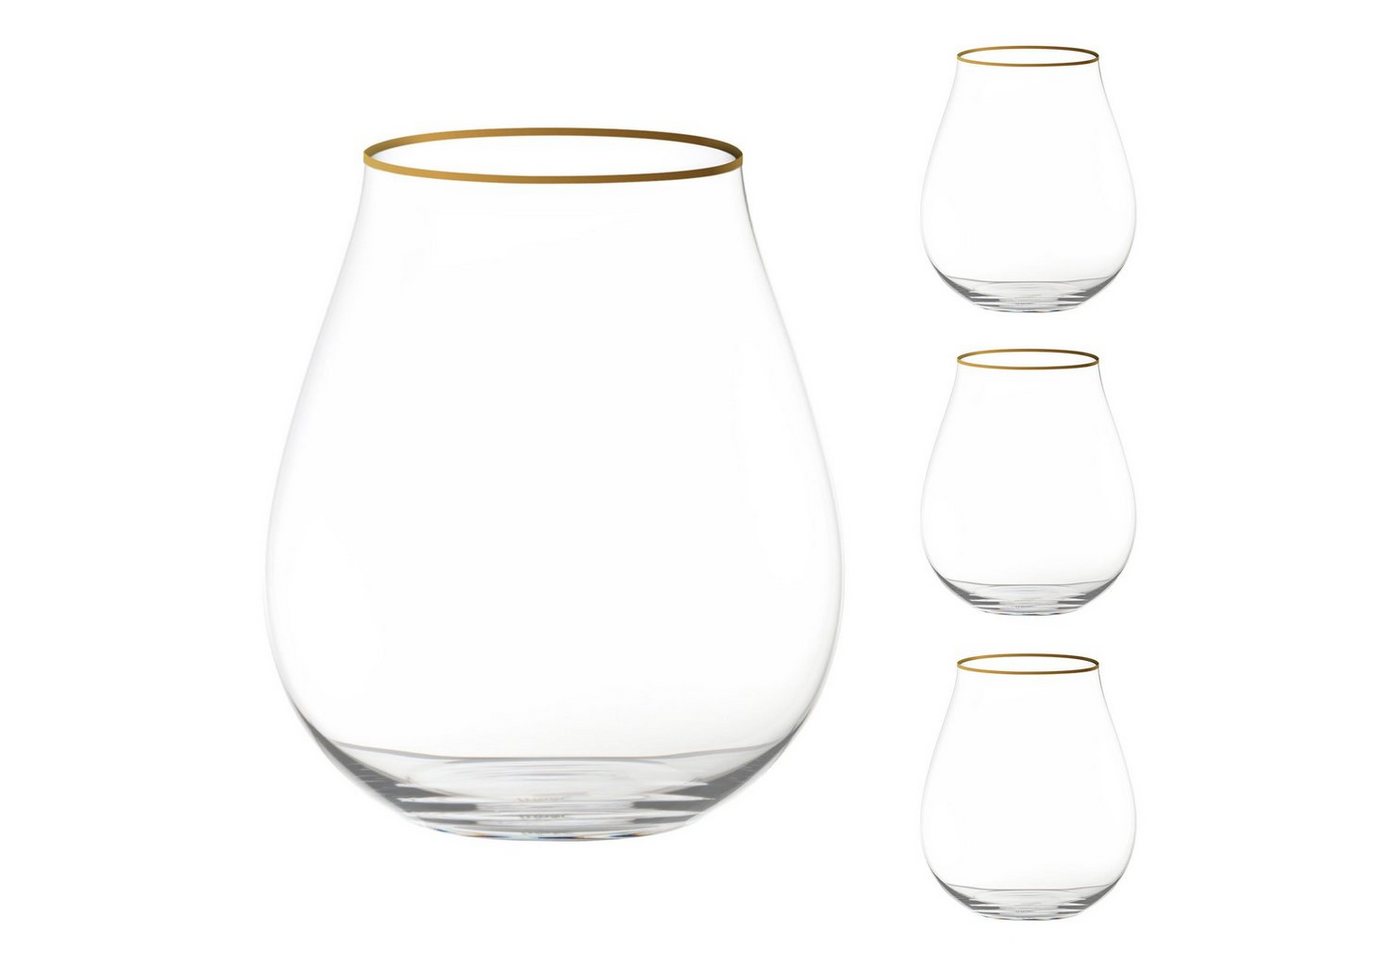 RIEDEL THE WINE GLASS COMPANY Glas Gin Set Limitierte Edition mit Goldrand, Kristallglas von RIEDEL THE WINE GLASS COMPANY